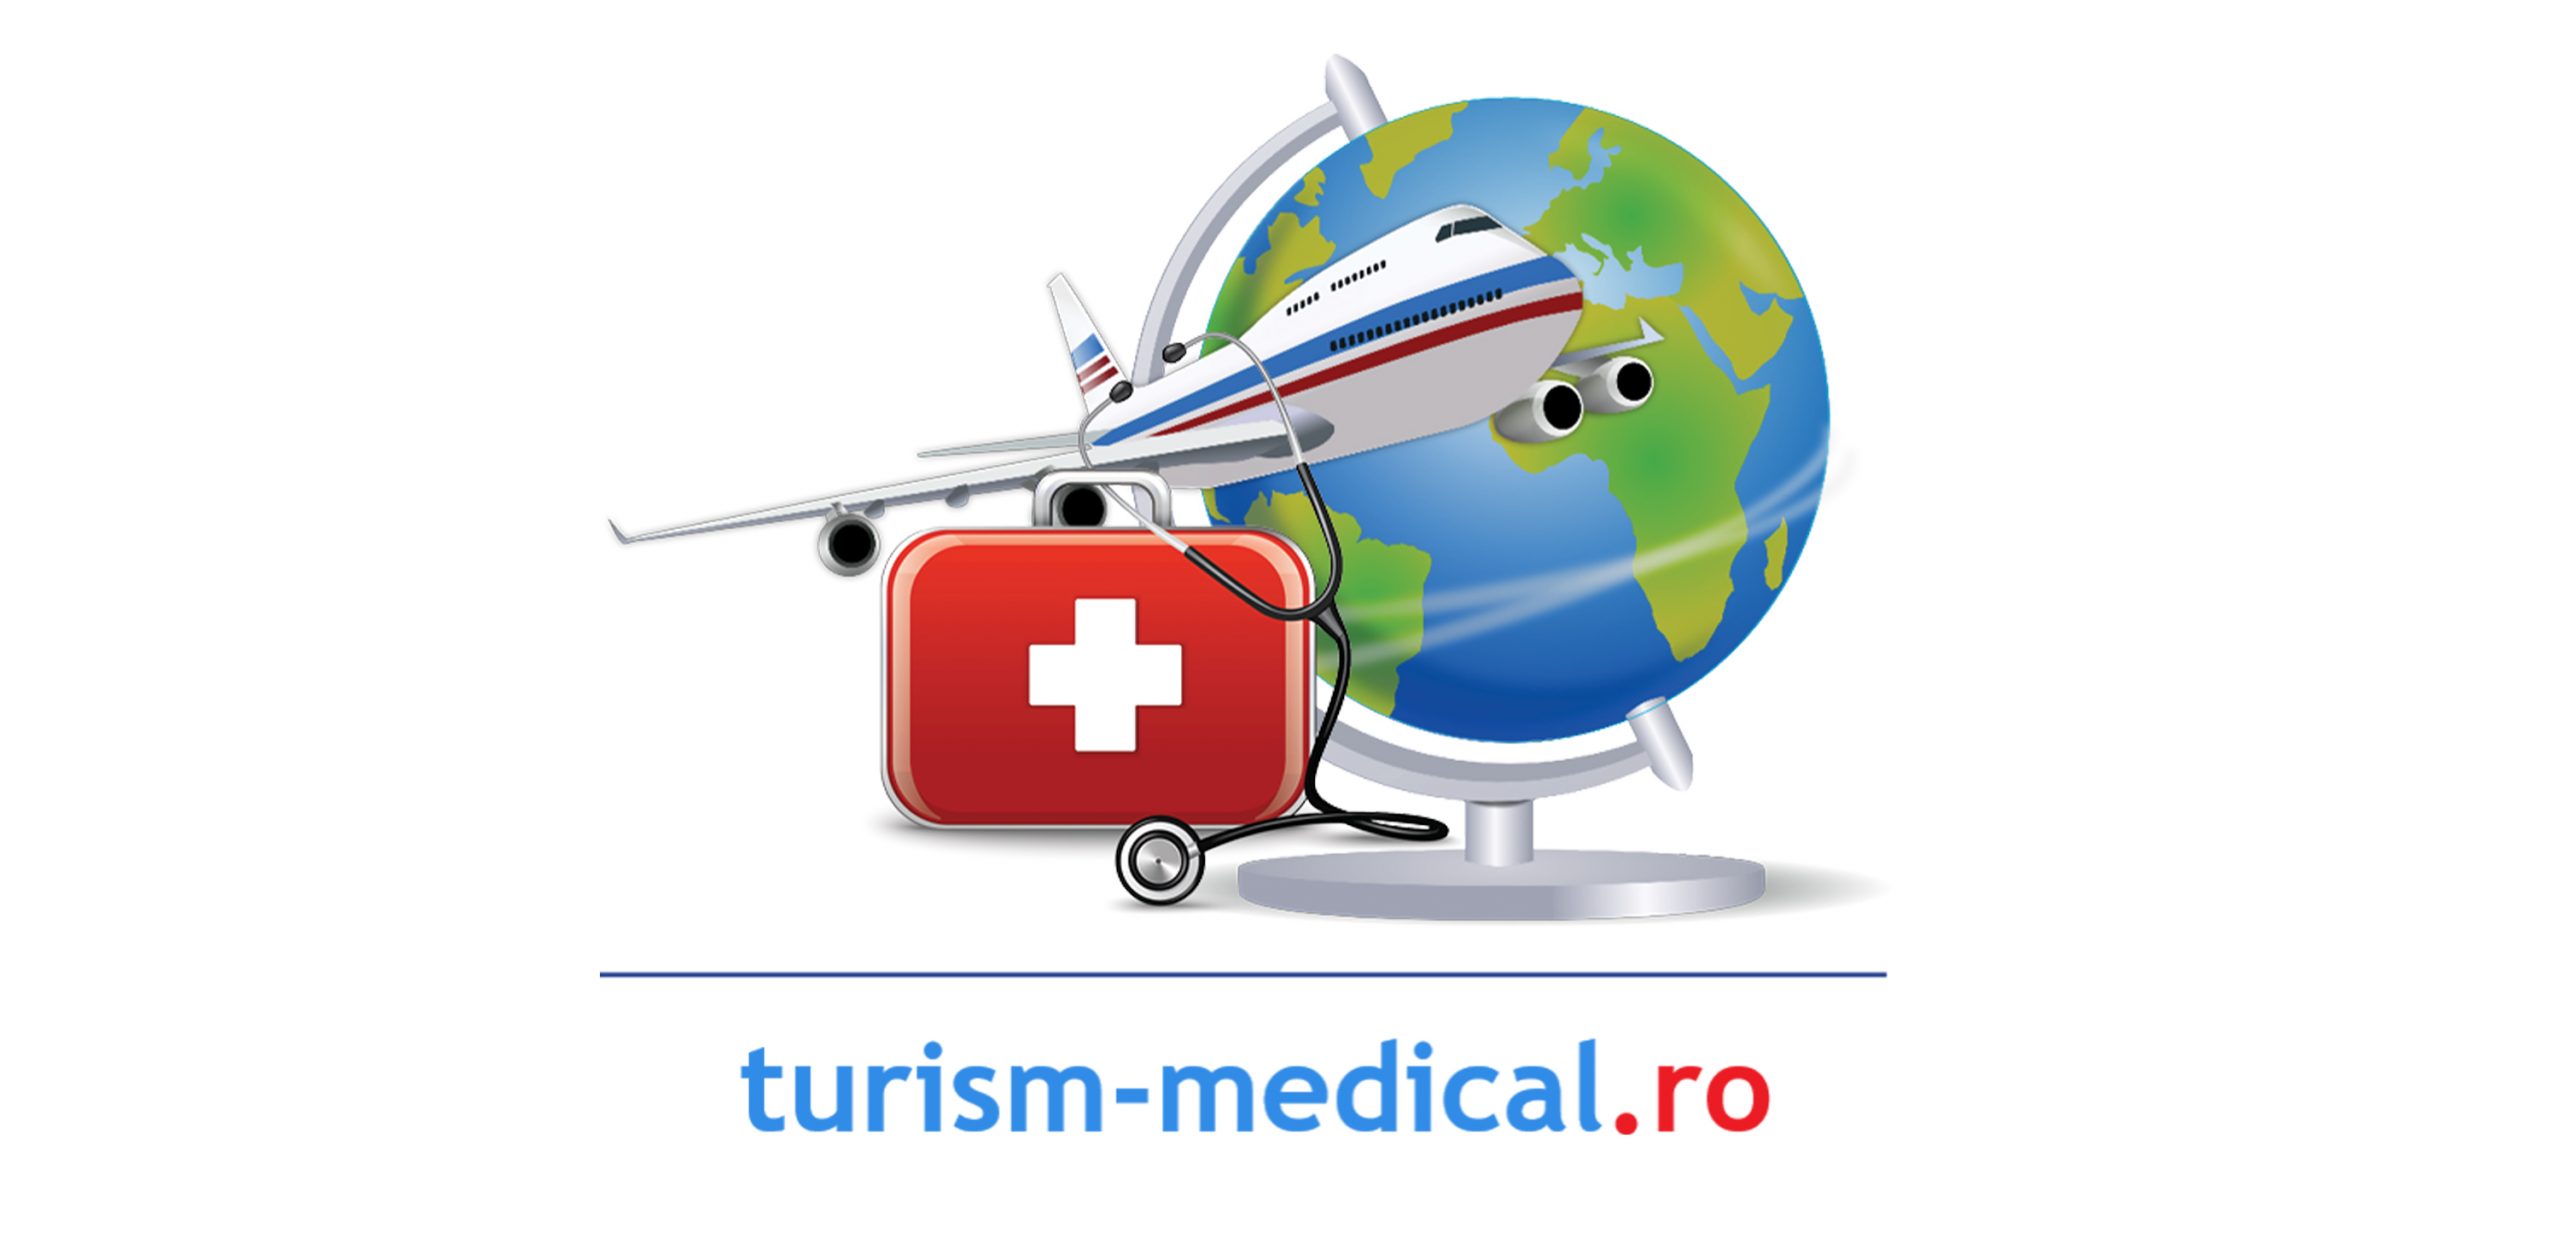 turism-medical.ro